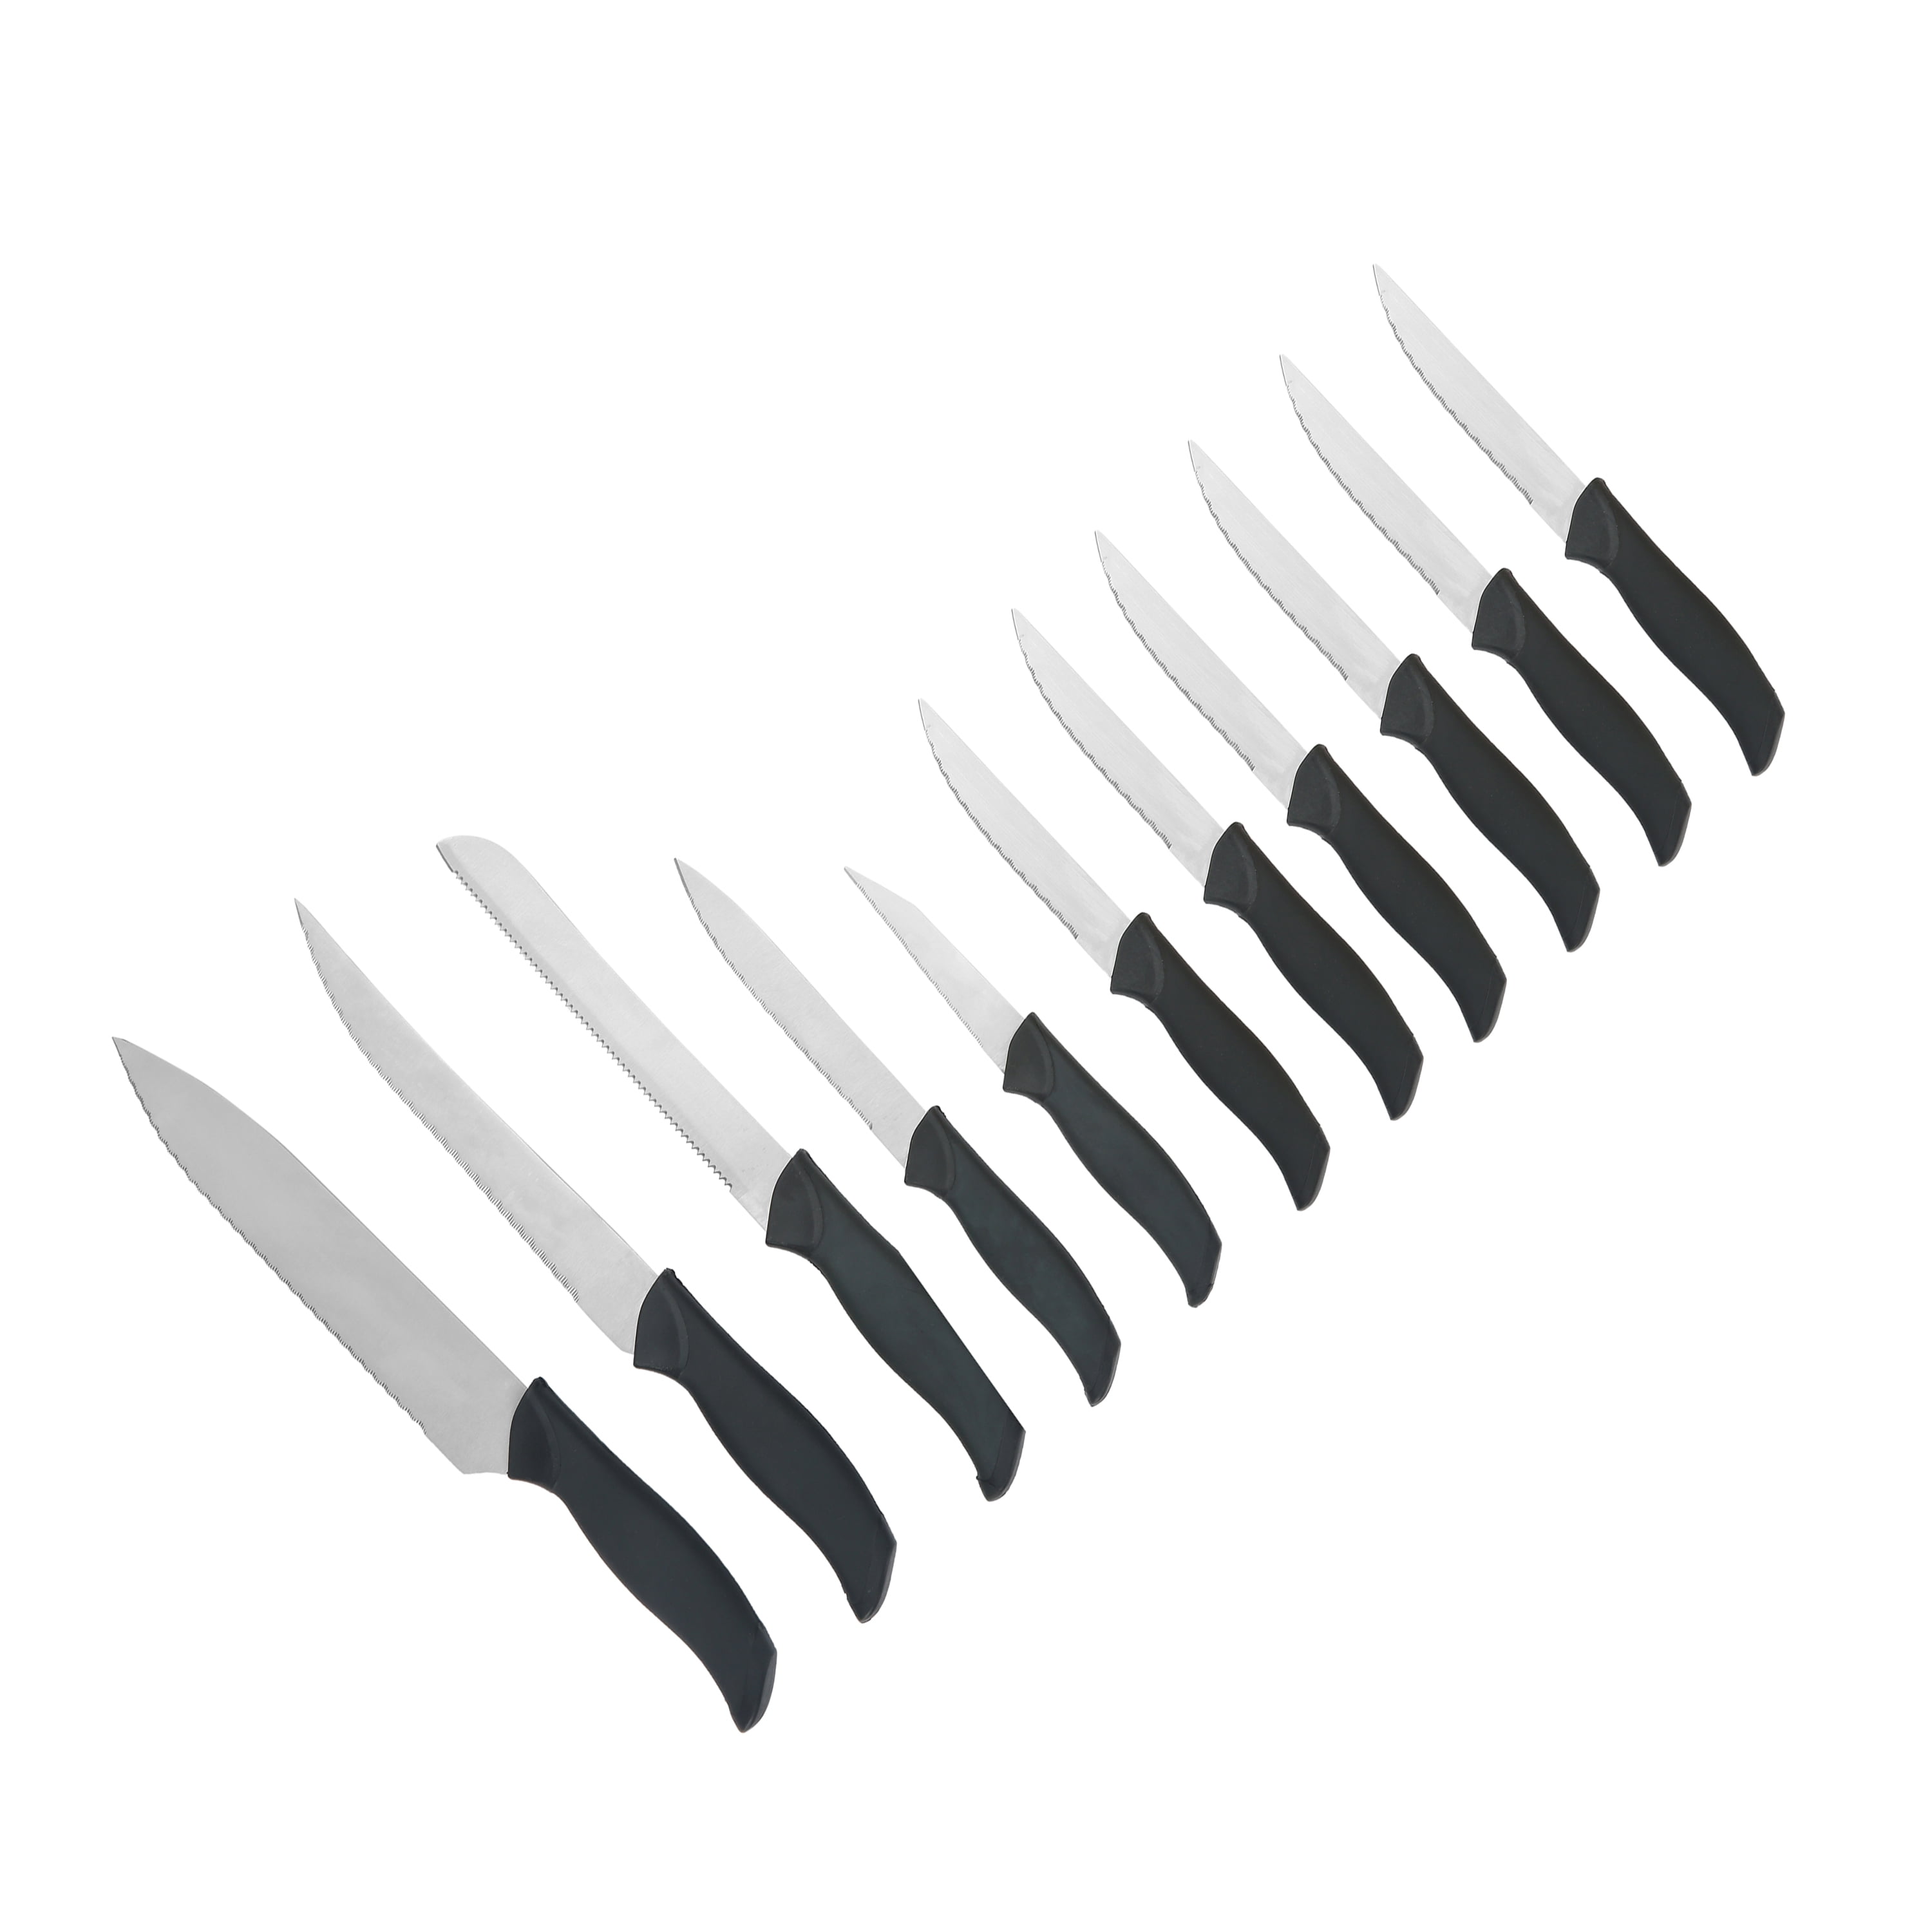 Chicago Cutlery Clybourn 12-Piece Knife Set - Runnings